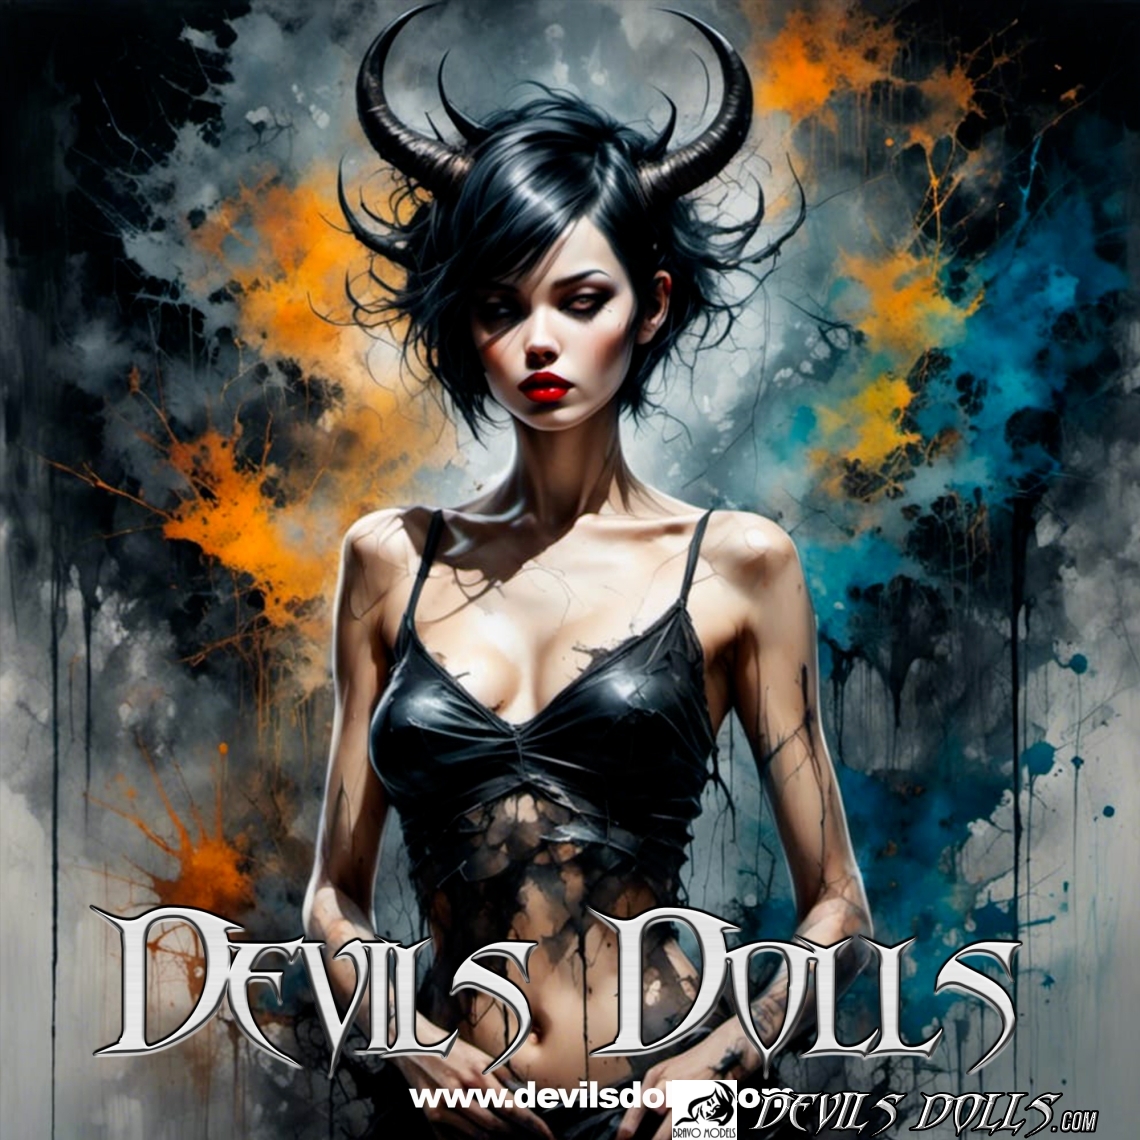 Devils Dolls